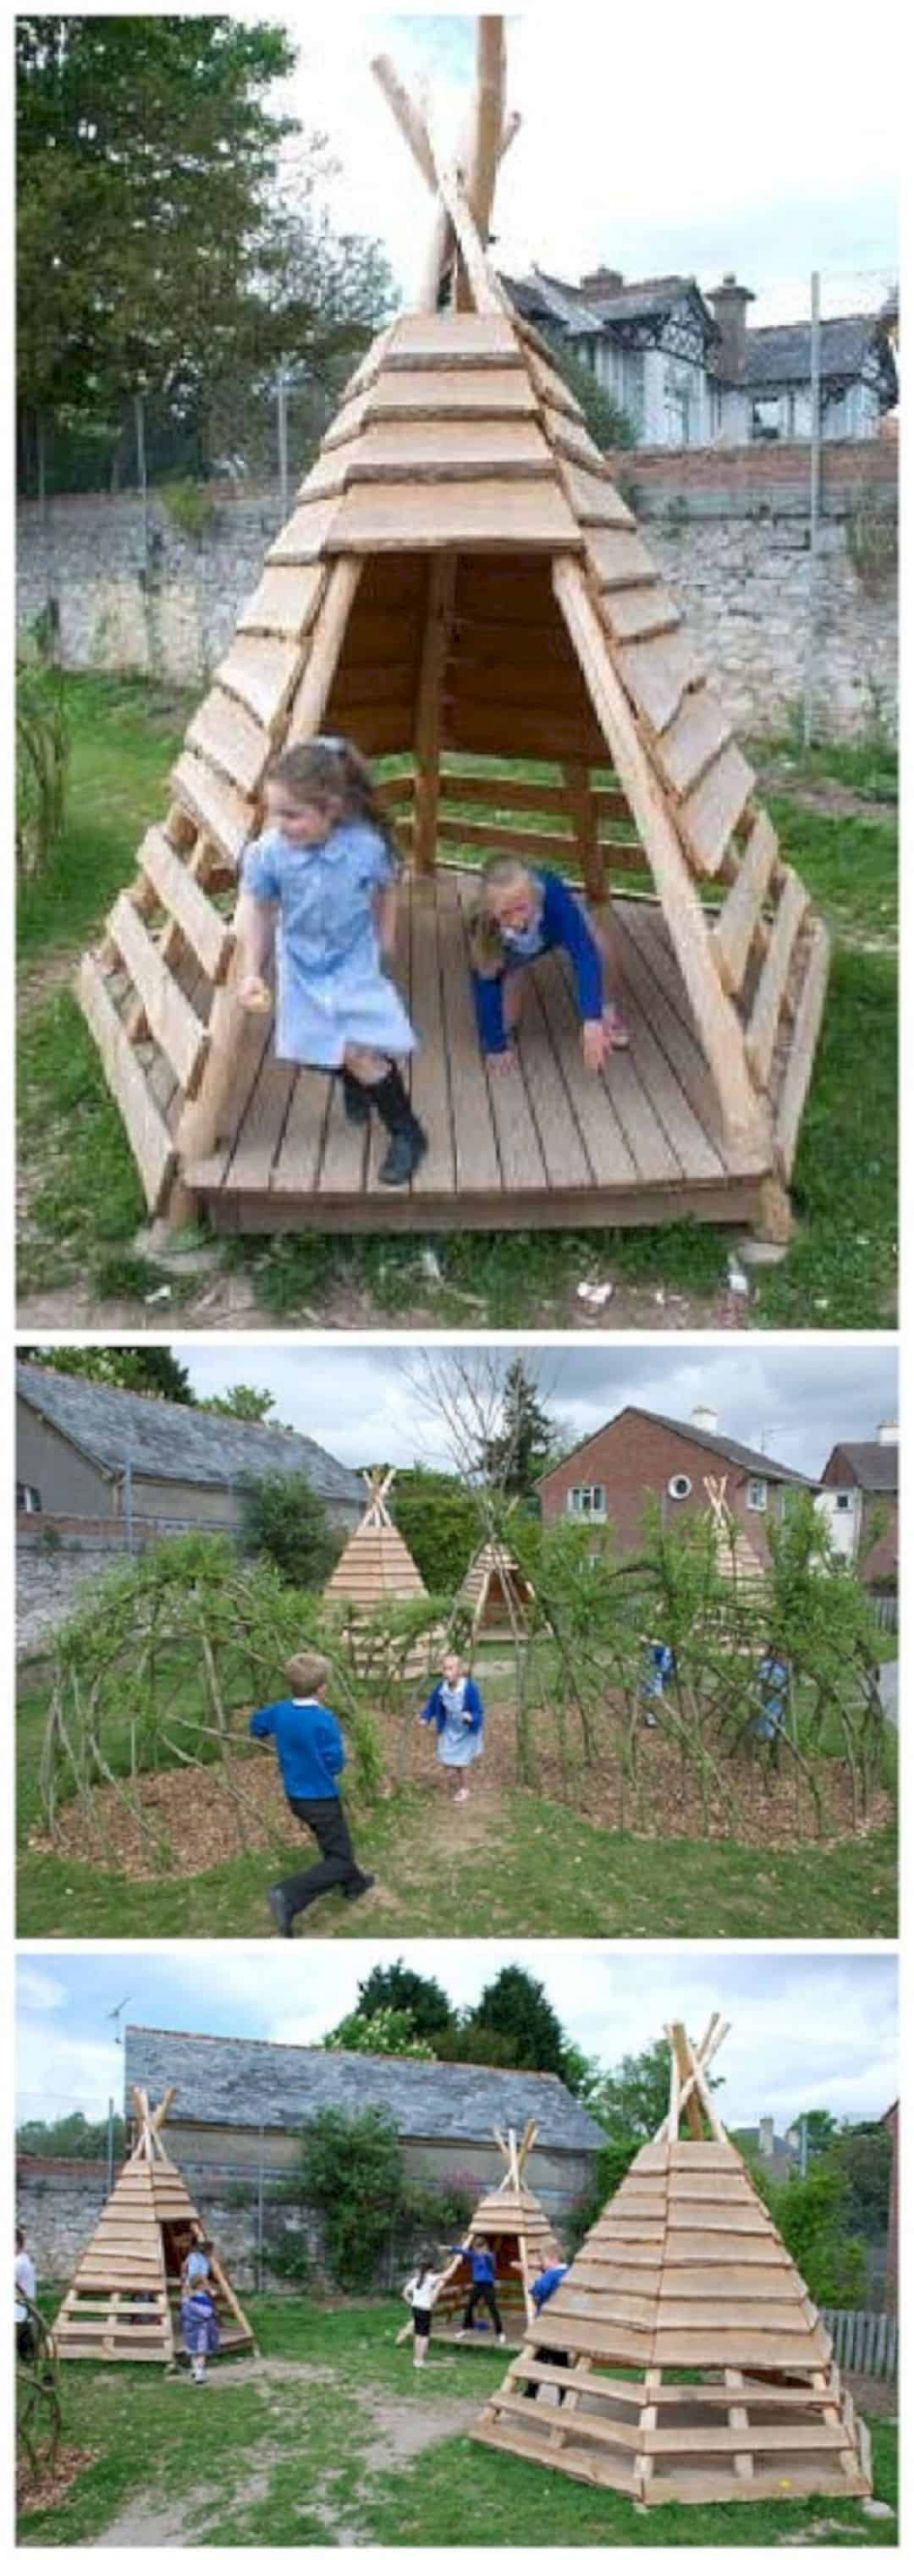 DIY Backyard Ideas For Kids
 Some Nice DIY Kids Playground Ideas for Your Backyard